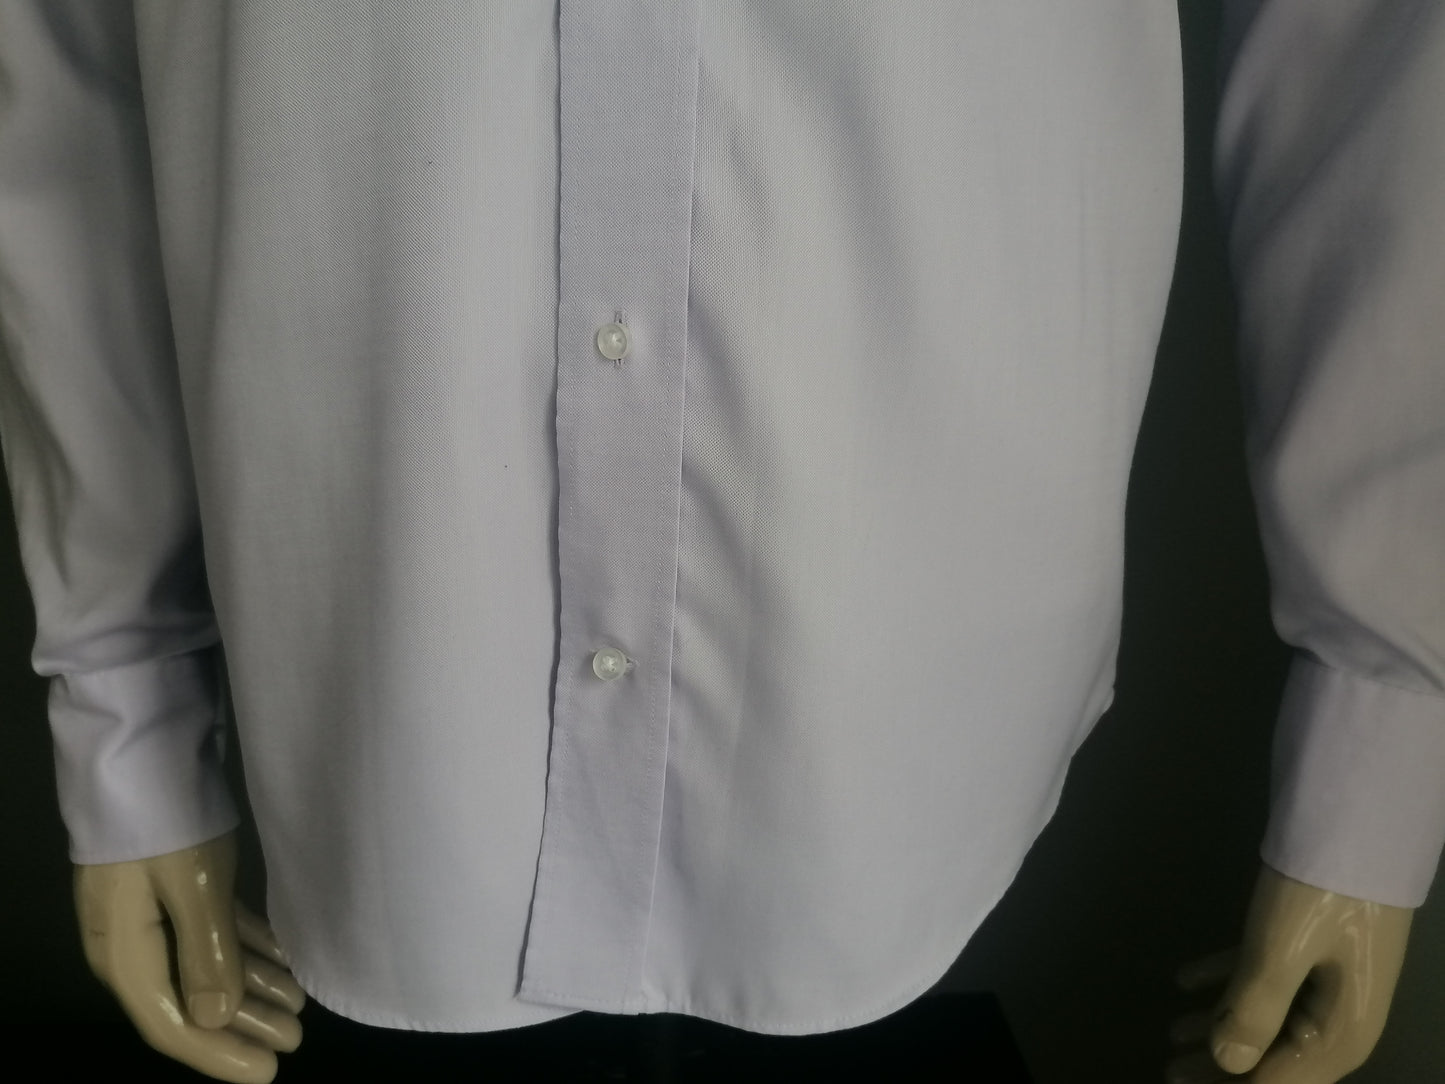 McGregor Distinction shirt. Lila / light purple colored. Size 39 / M.